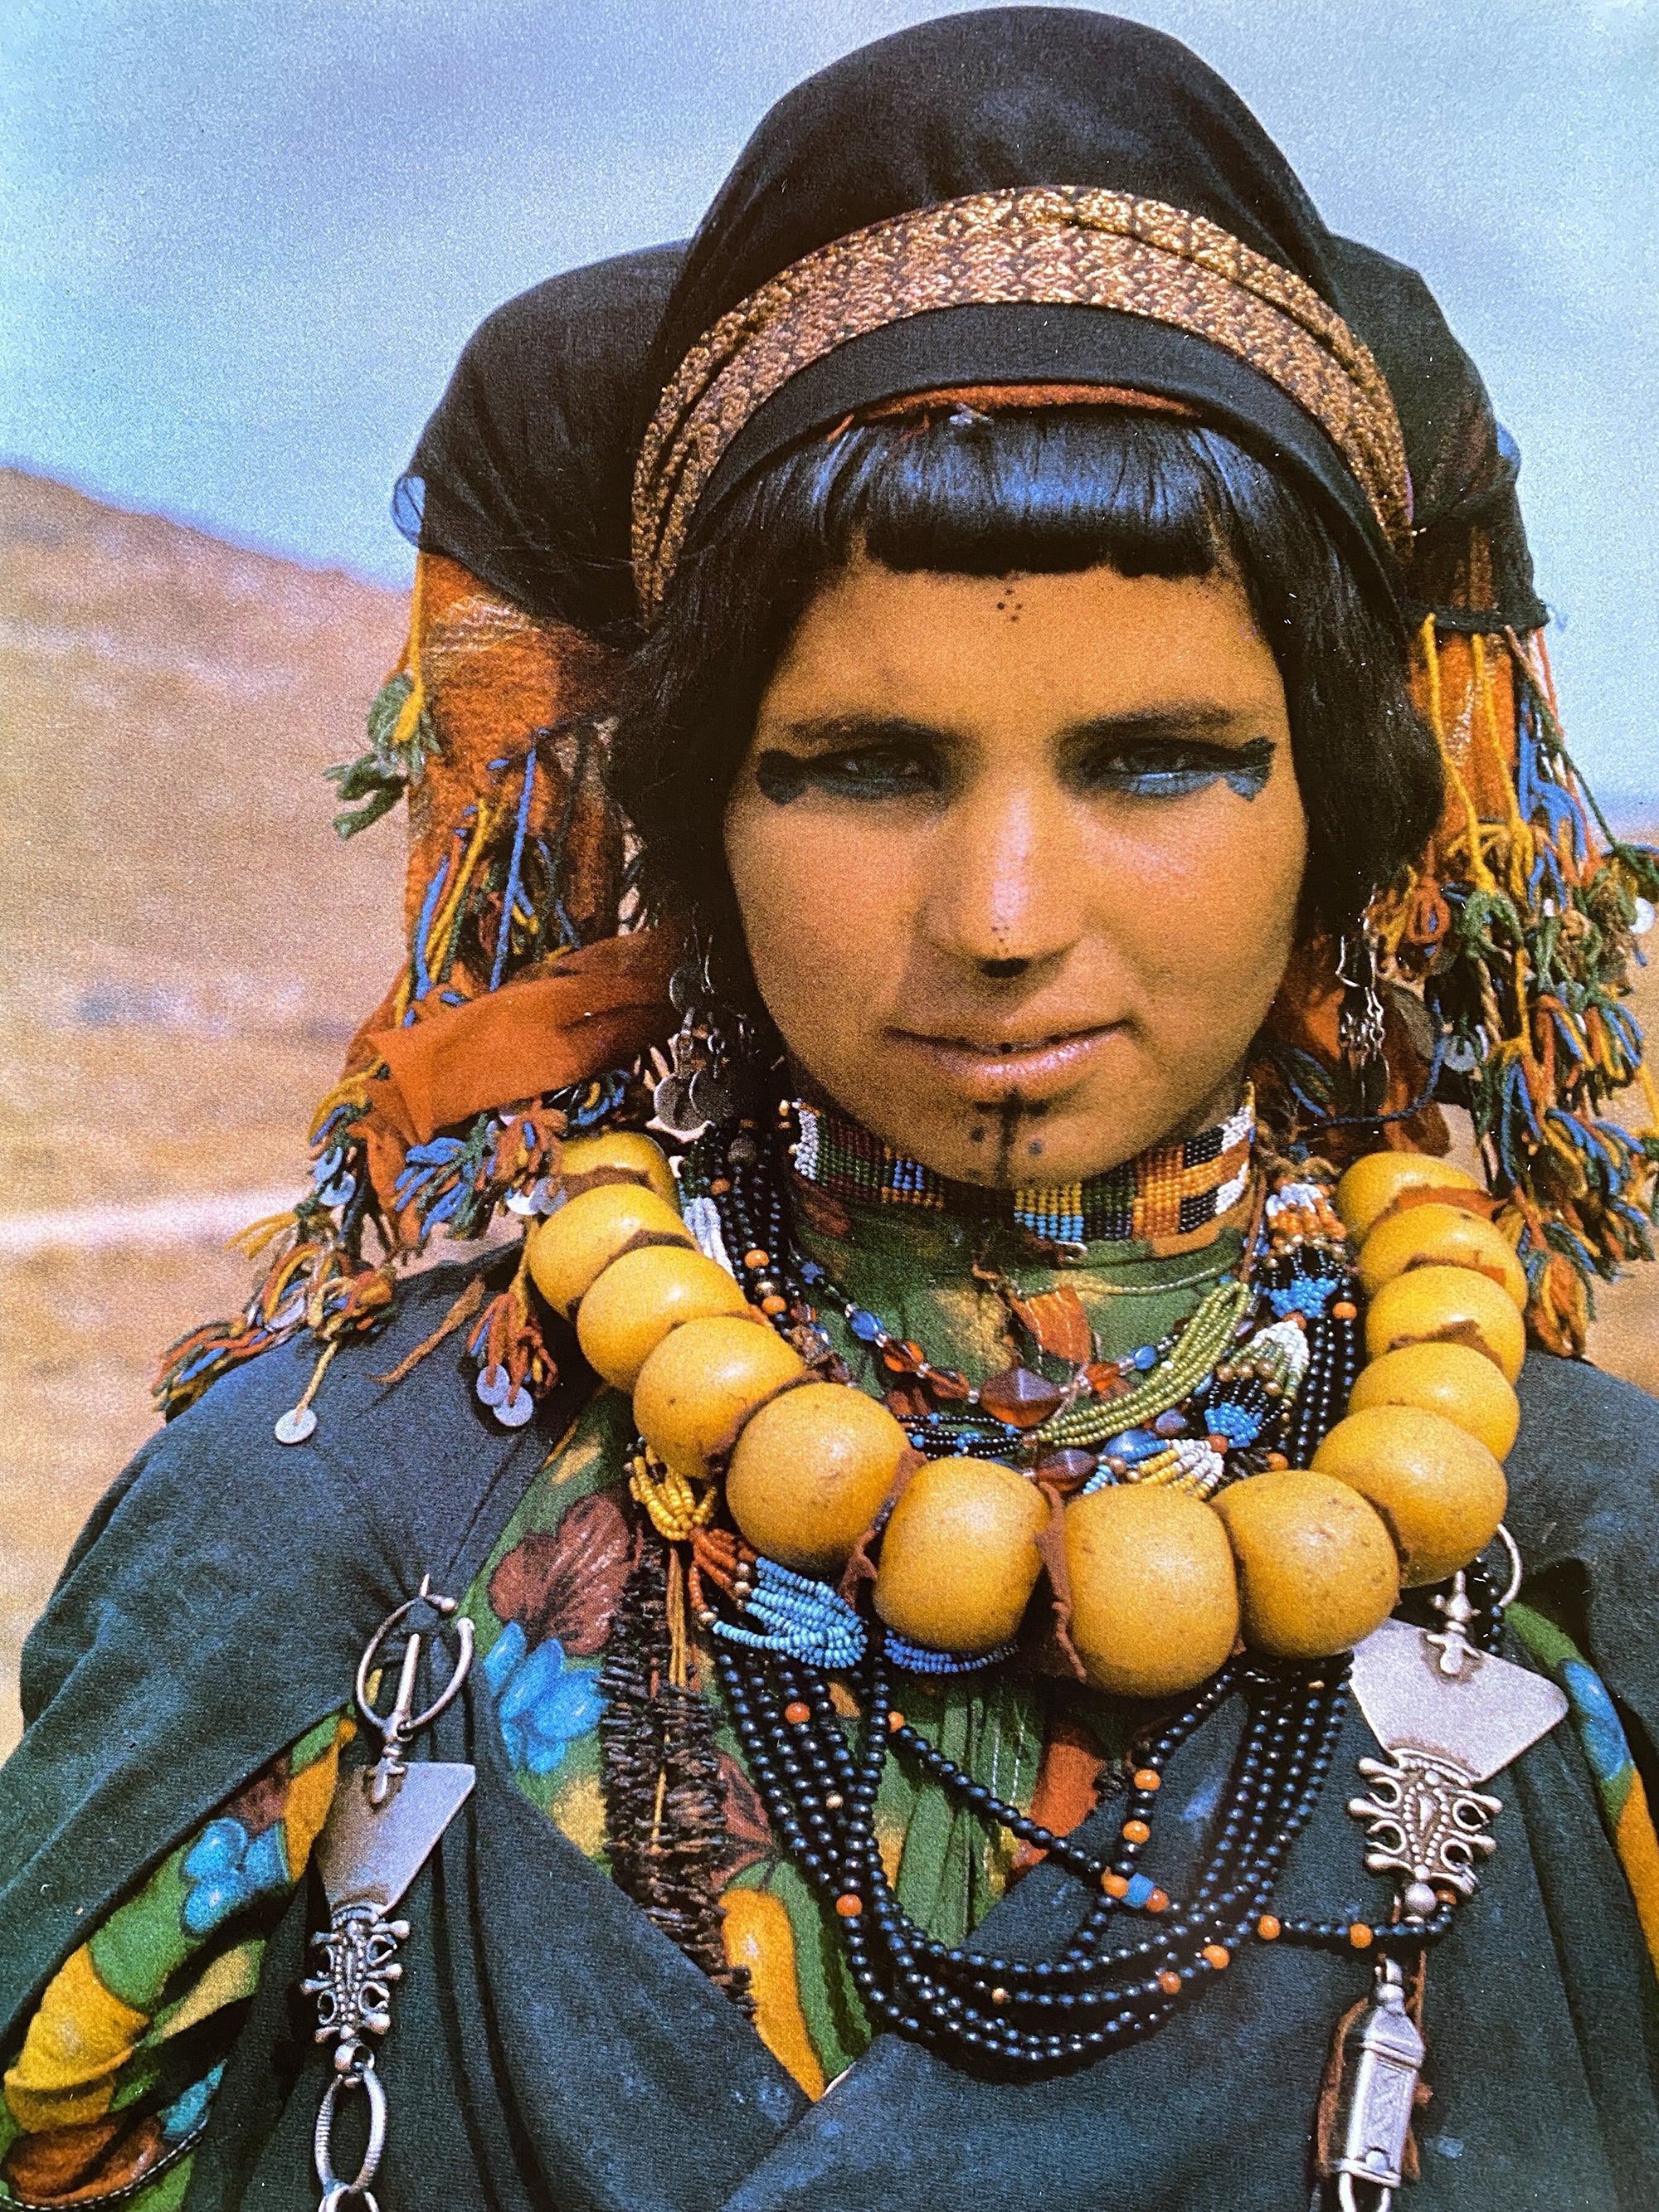 Bijoux du Maroc